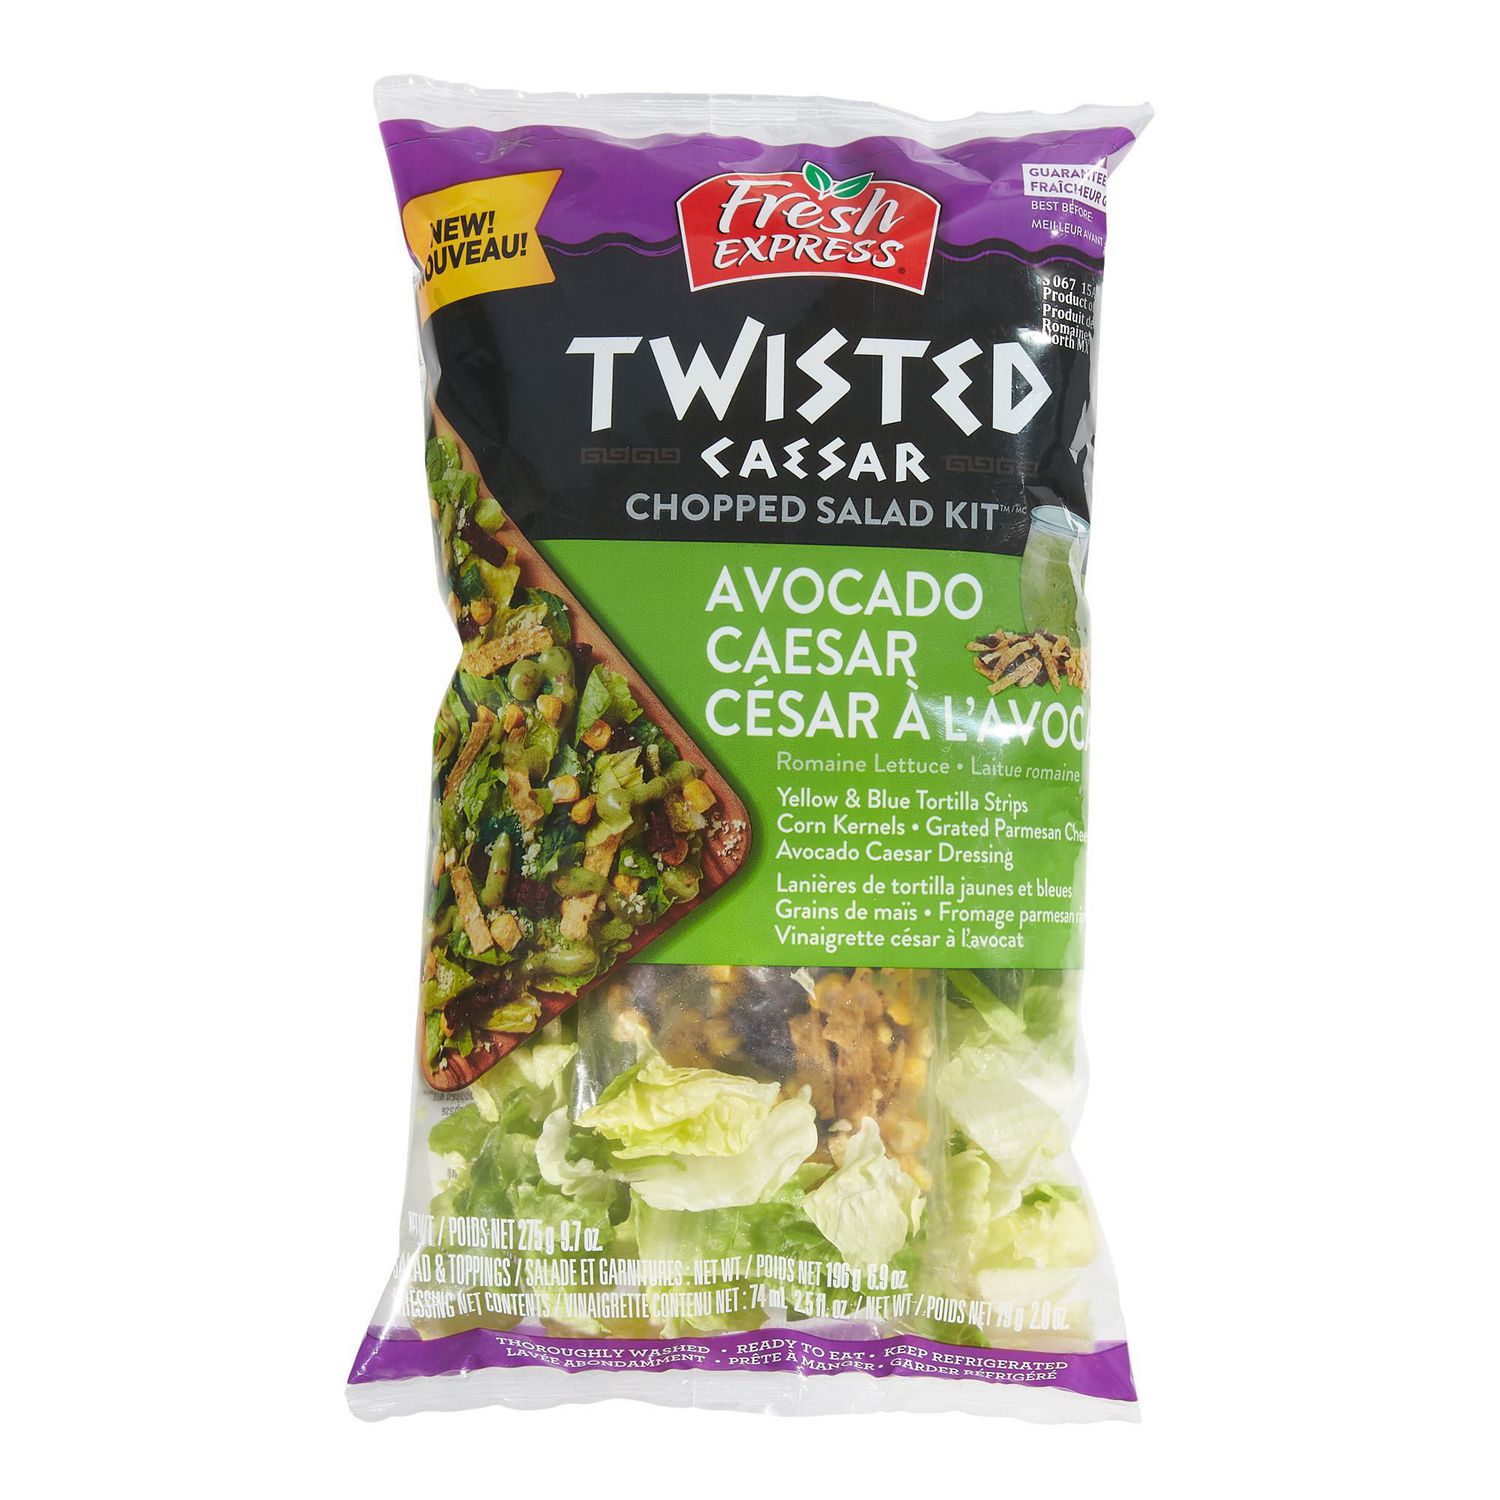 Twisted Caesar Avocado Caesar Chopped Salad Kit - Fresh Express